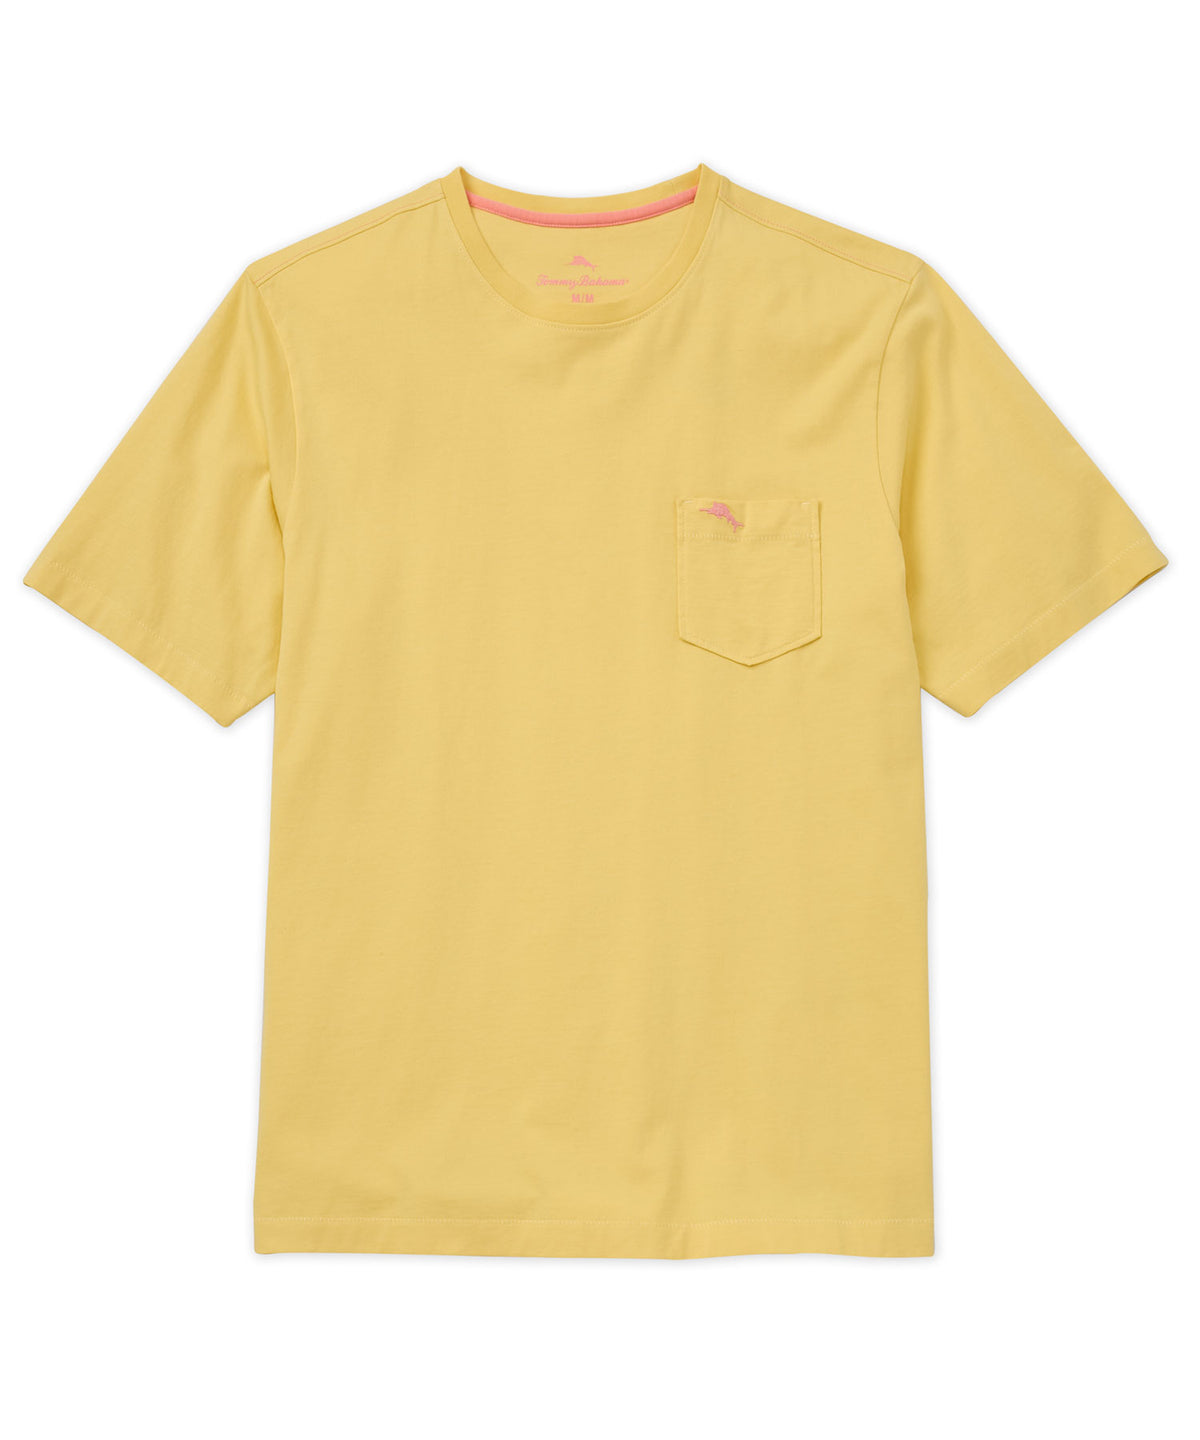 Tommy Bahama Short Sleeve Pima Pocket Tee Shirt, Big & Tall